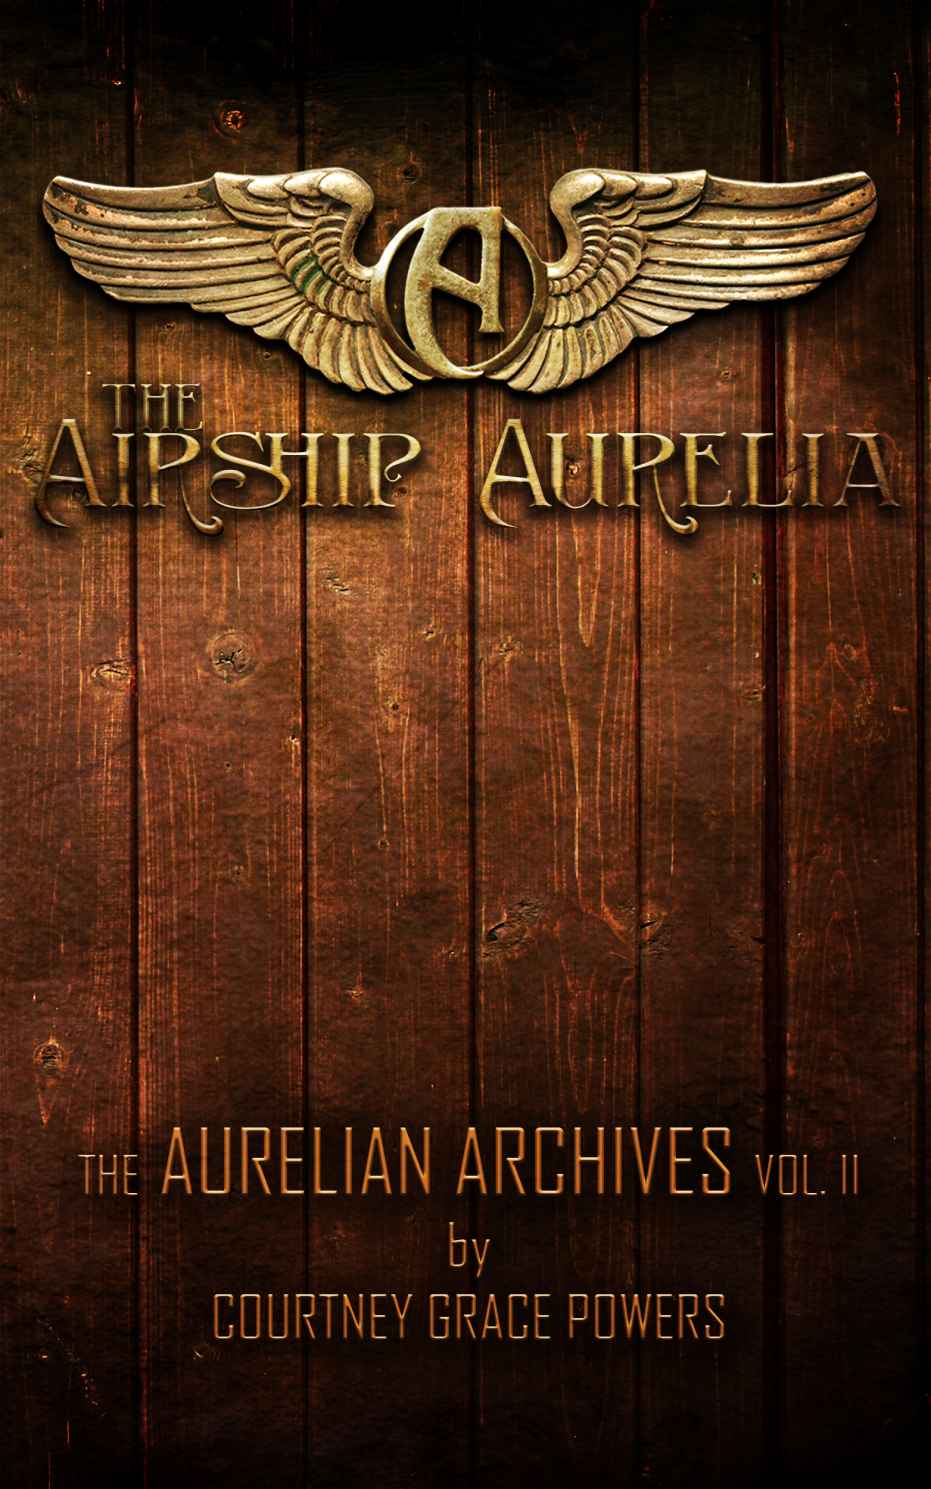 The Airship Aurelia (The Aurelian Archives)